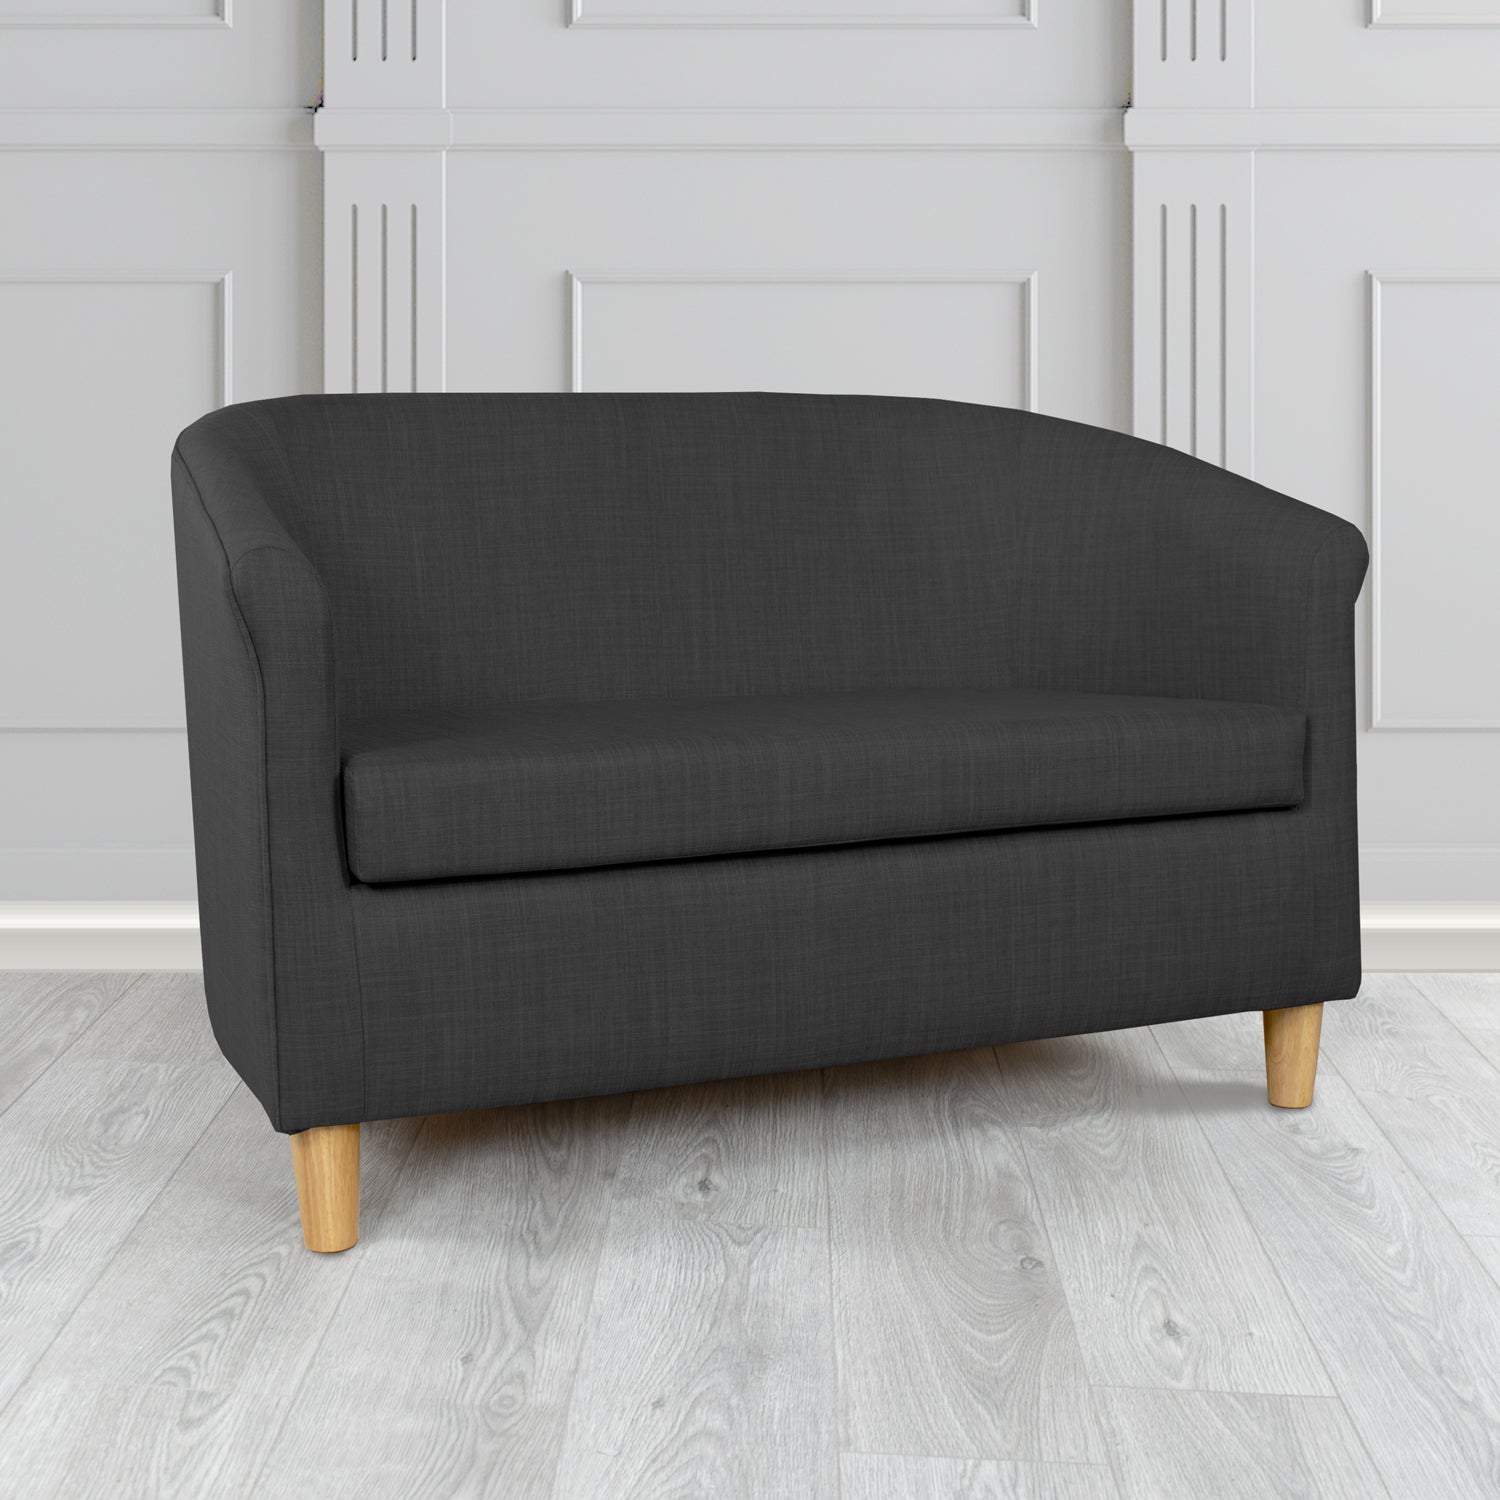 Tuscany Charles Ebony Plain Linen Fabric 2 Seater Tub Sofa - The Tub Chair Shop